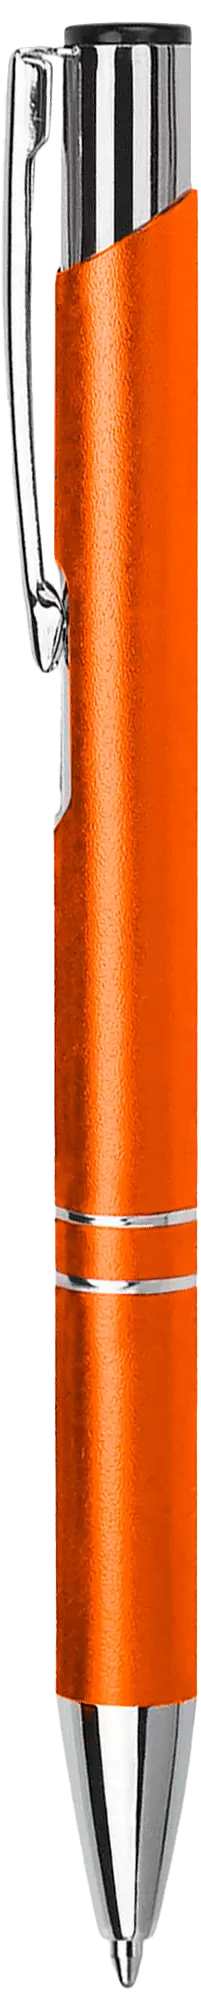 Ручка KOSKO FROST Оранжевая 1008-05